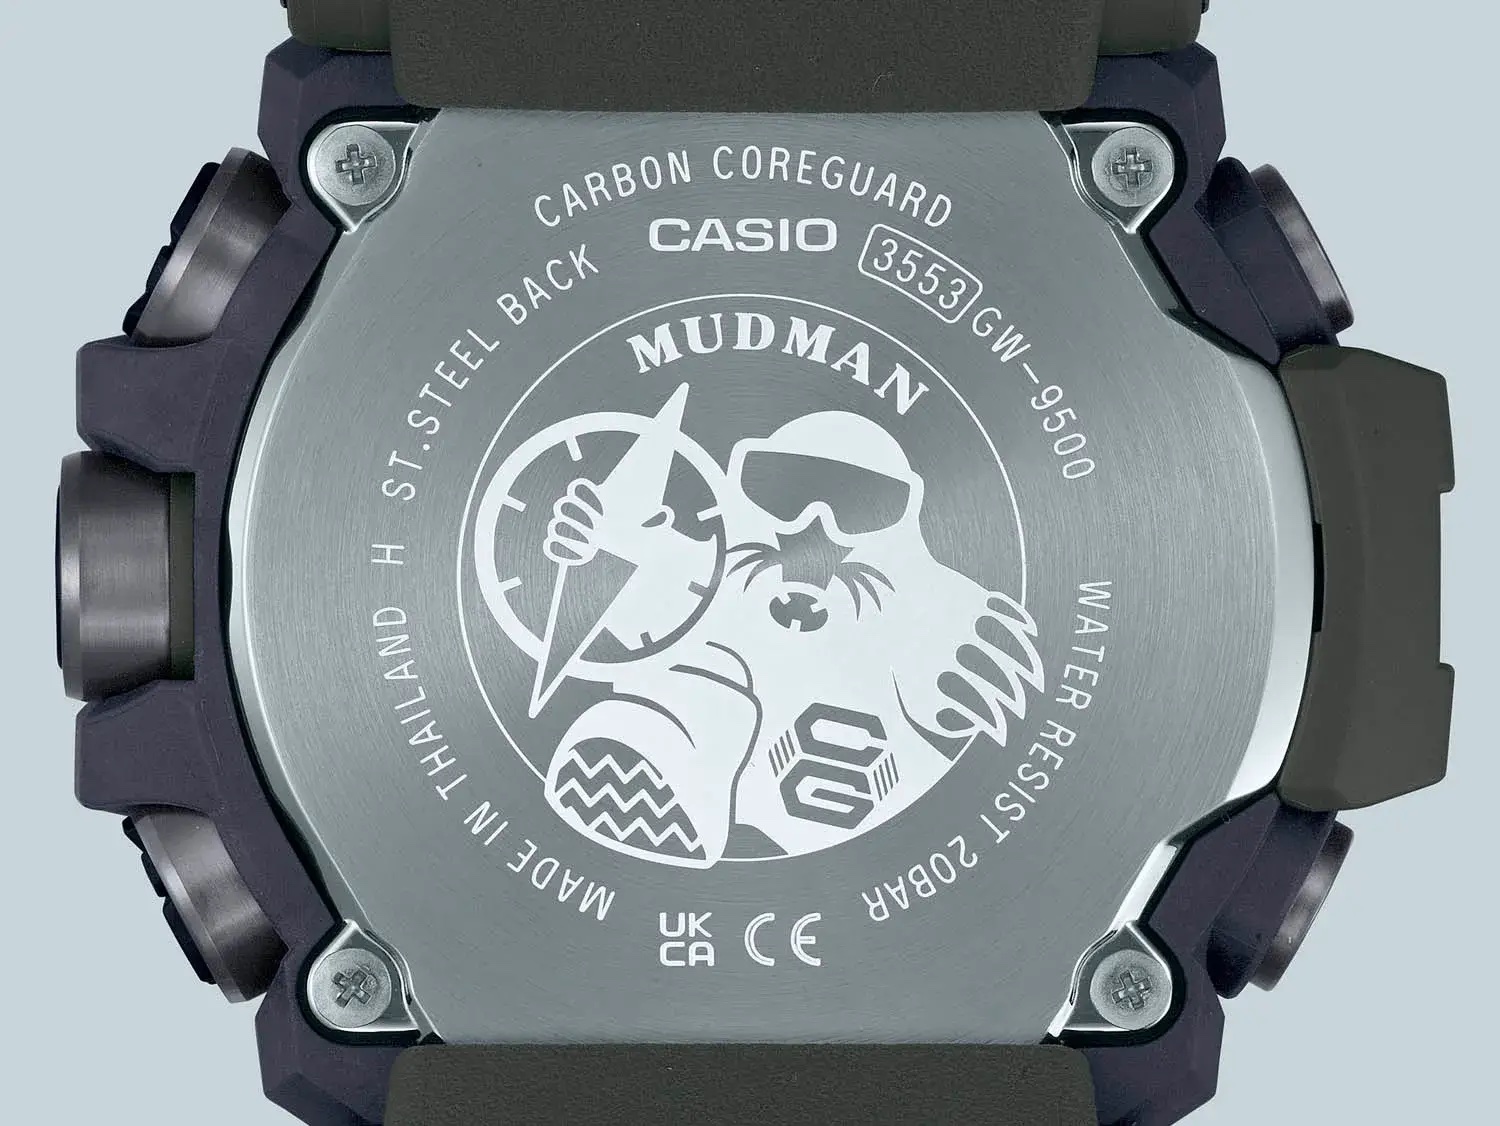 Casio G-SHOCK MUDMAN GW-9500-1ER Trasera